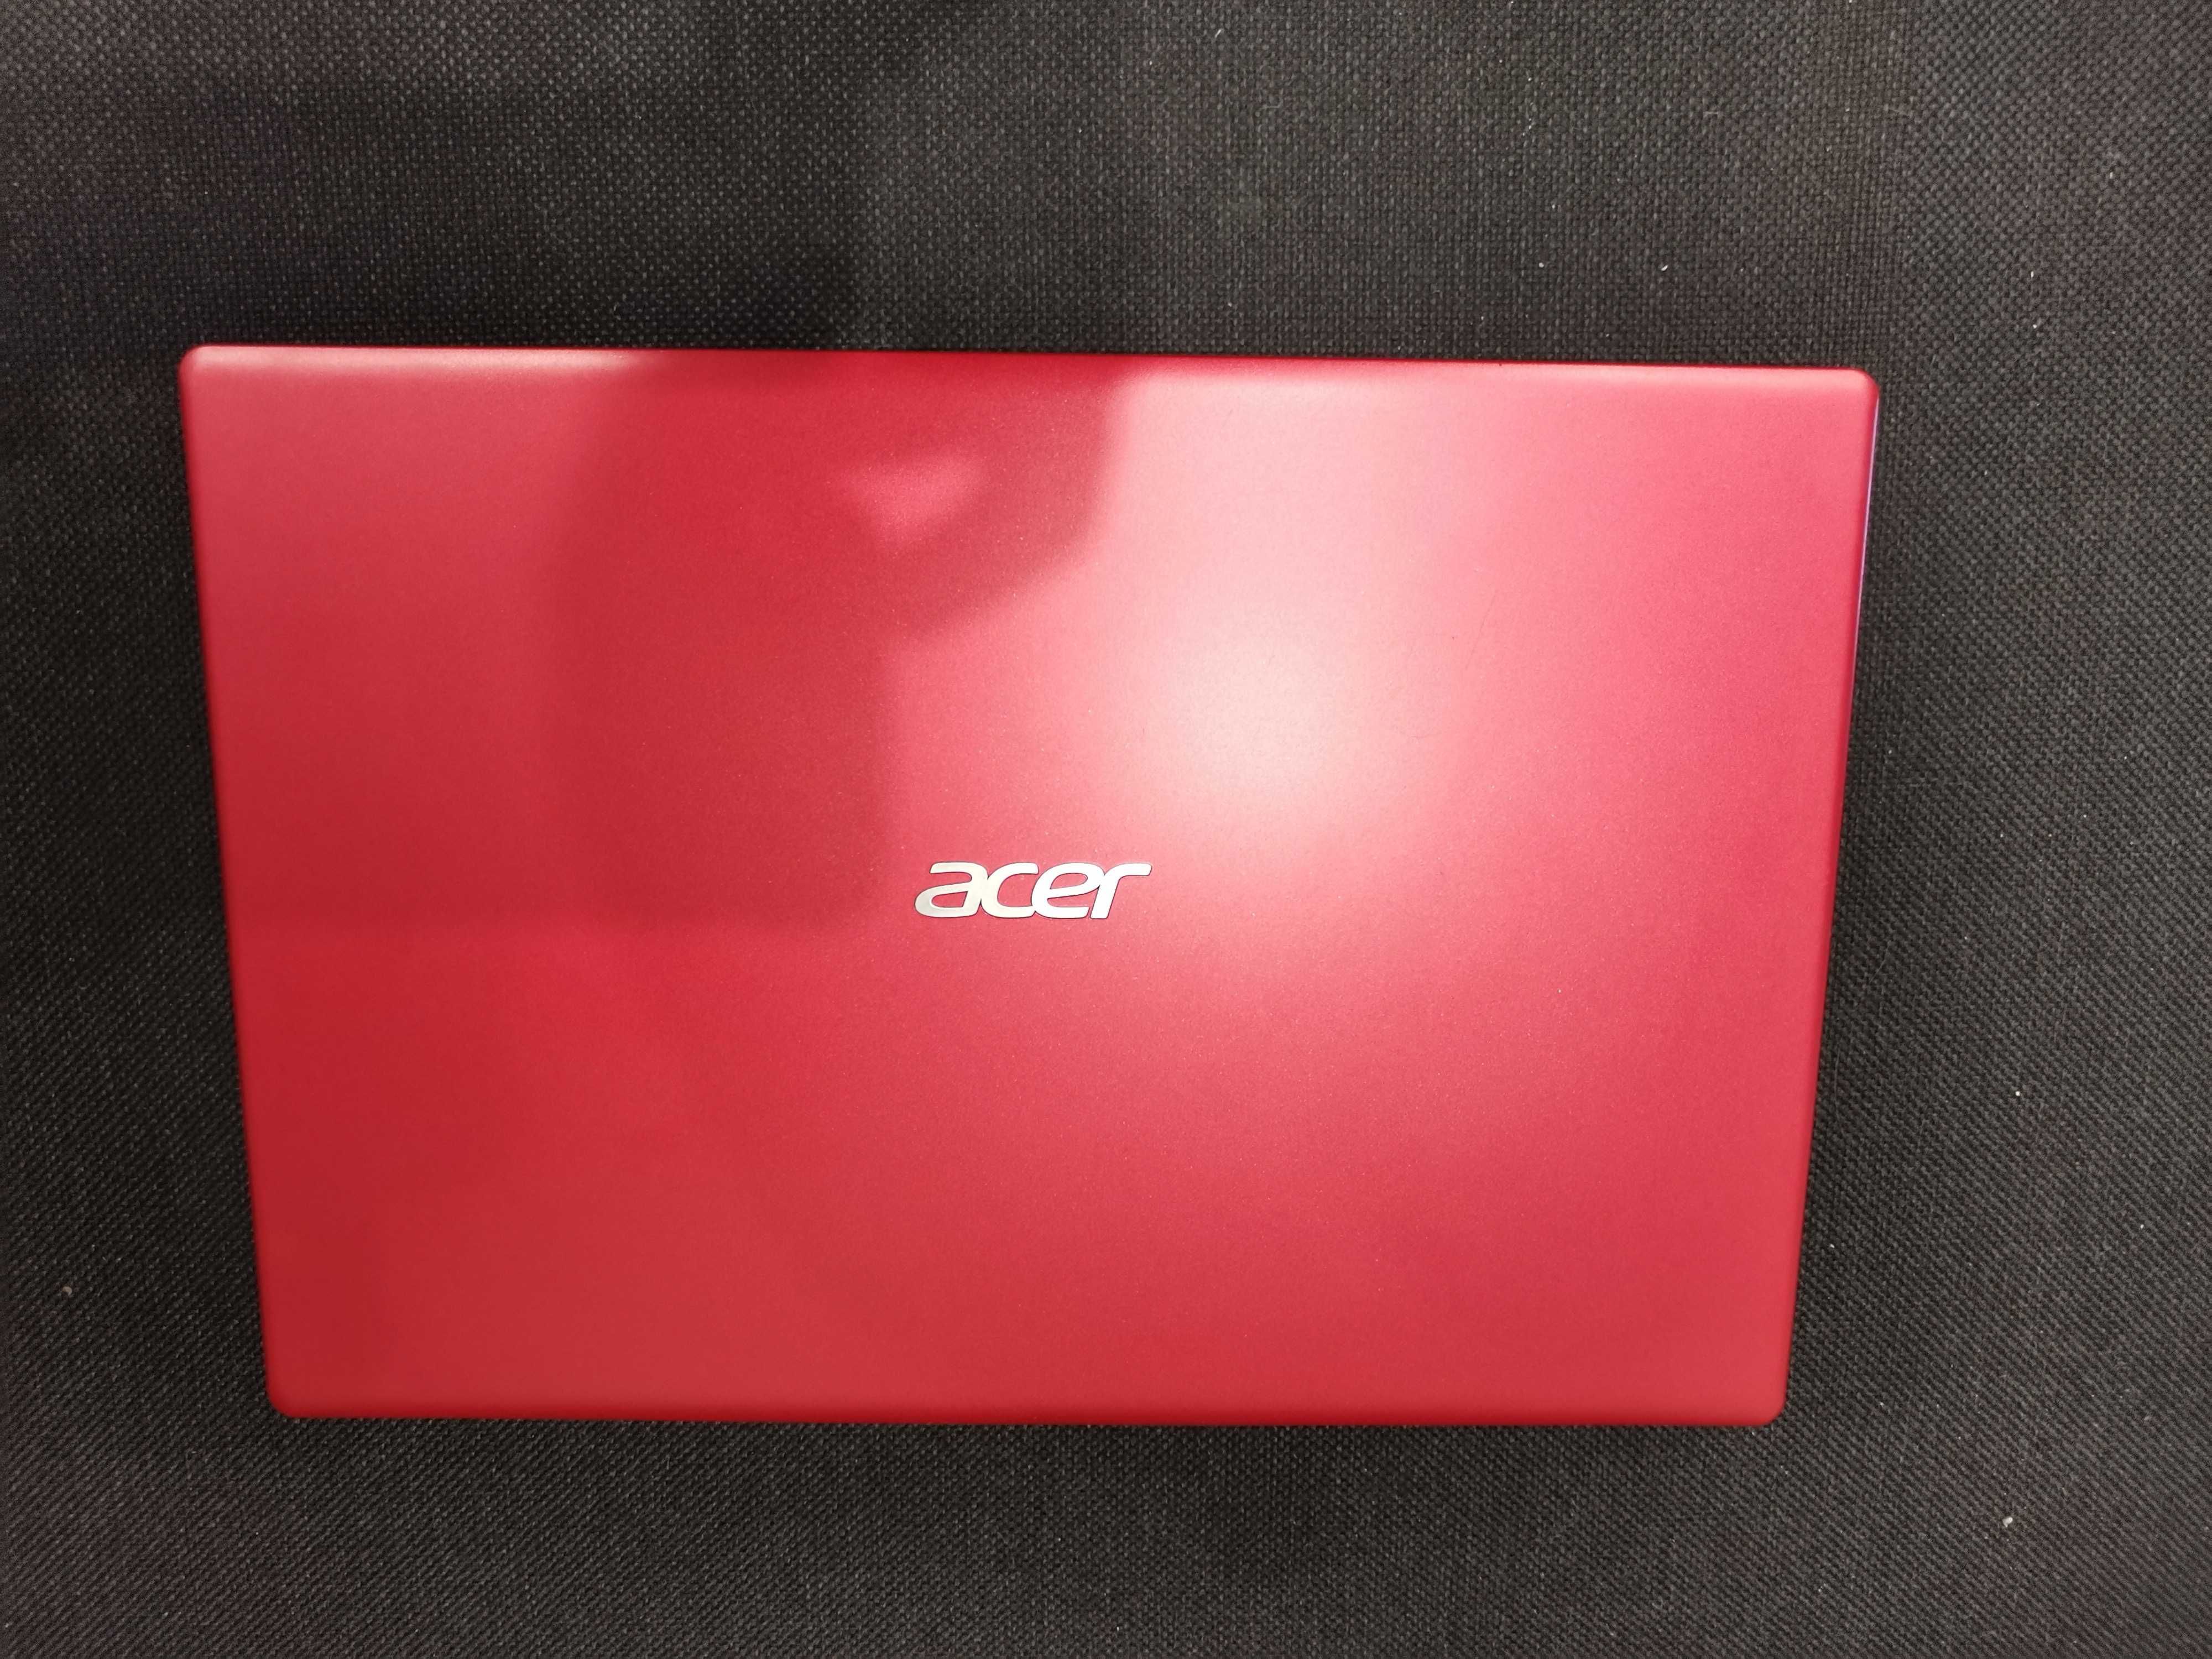 Acer i3-10110u 2.59ghz,gen.10,ram 8gb,ssd 256gb,Nvidia mx 230,2gb,FHD